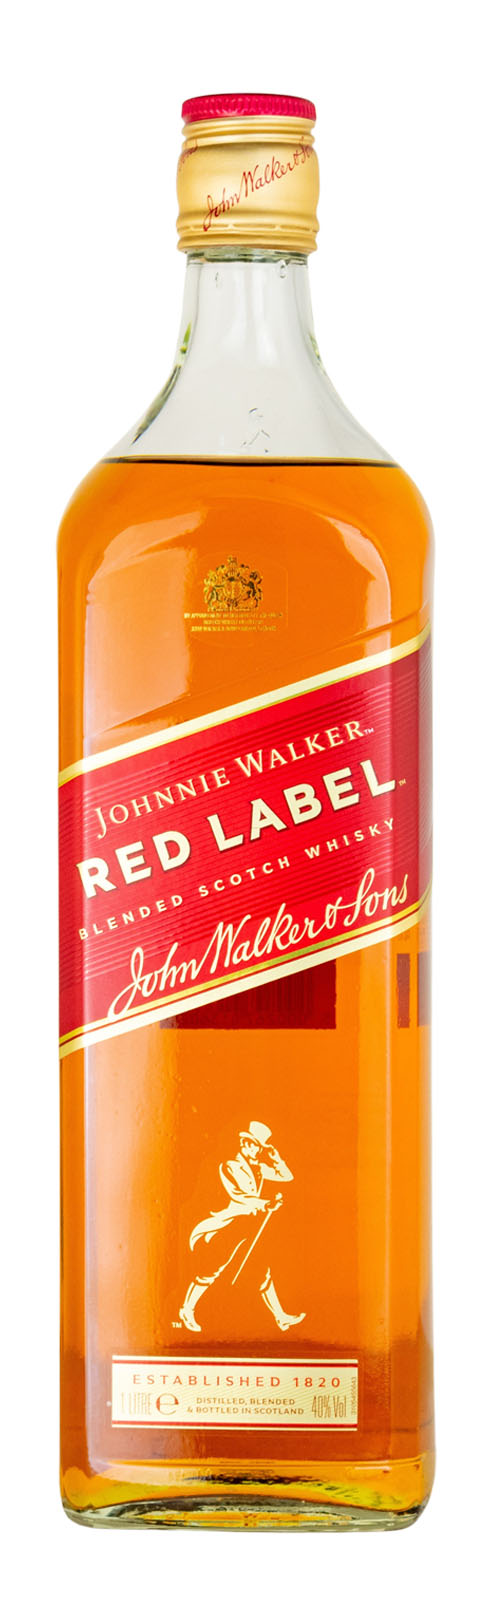 Johnnie Walker Whisky Red Label Scotch Whisky - 1 Liter 40% vol